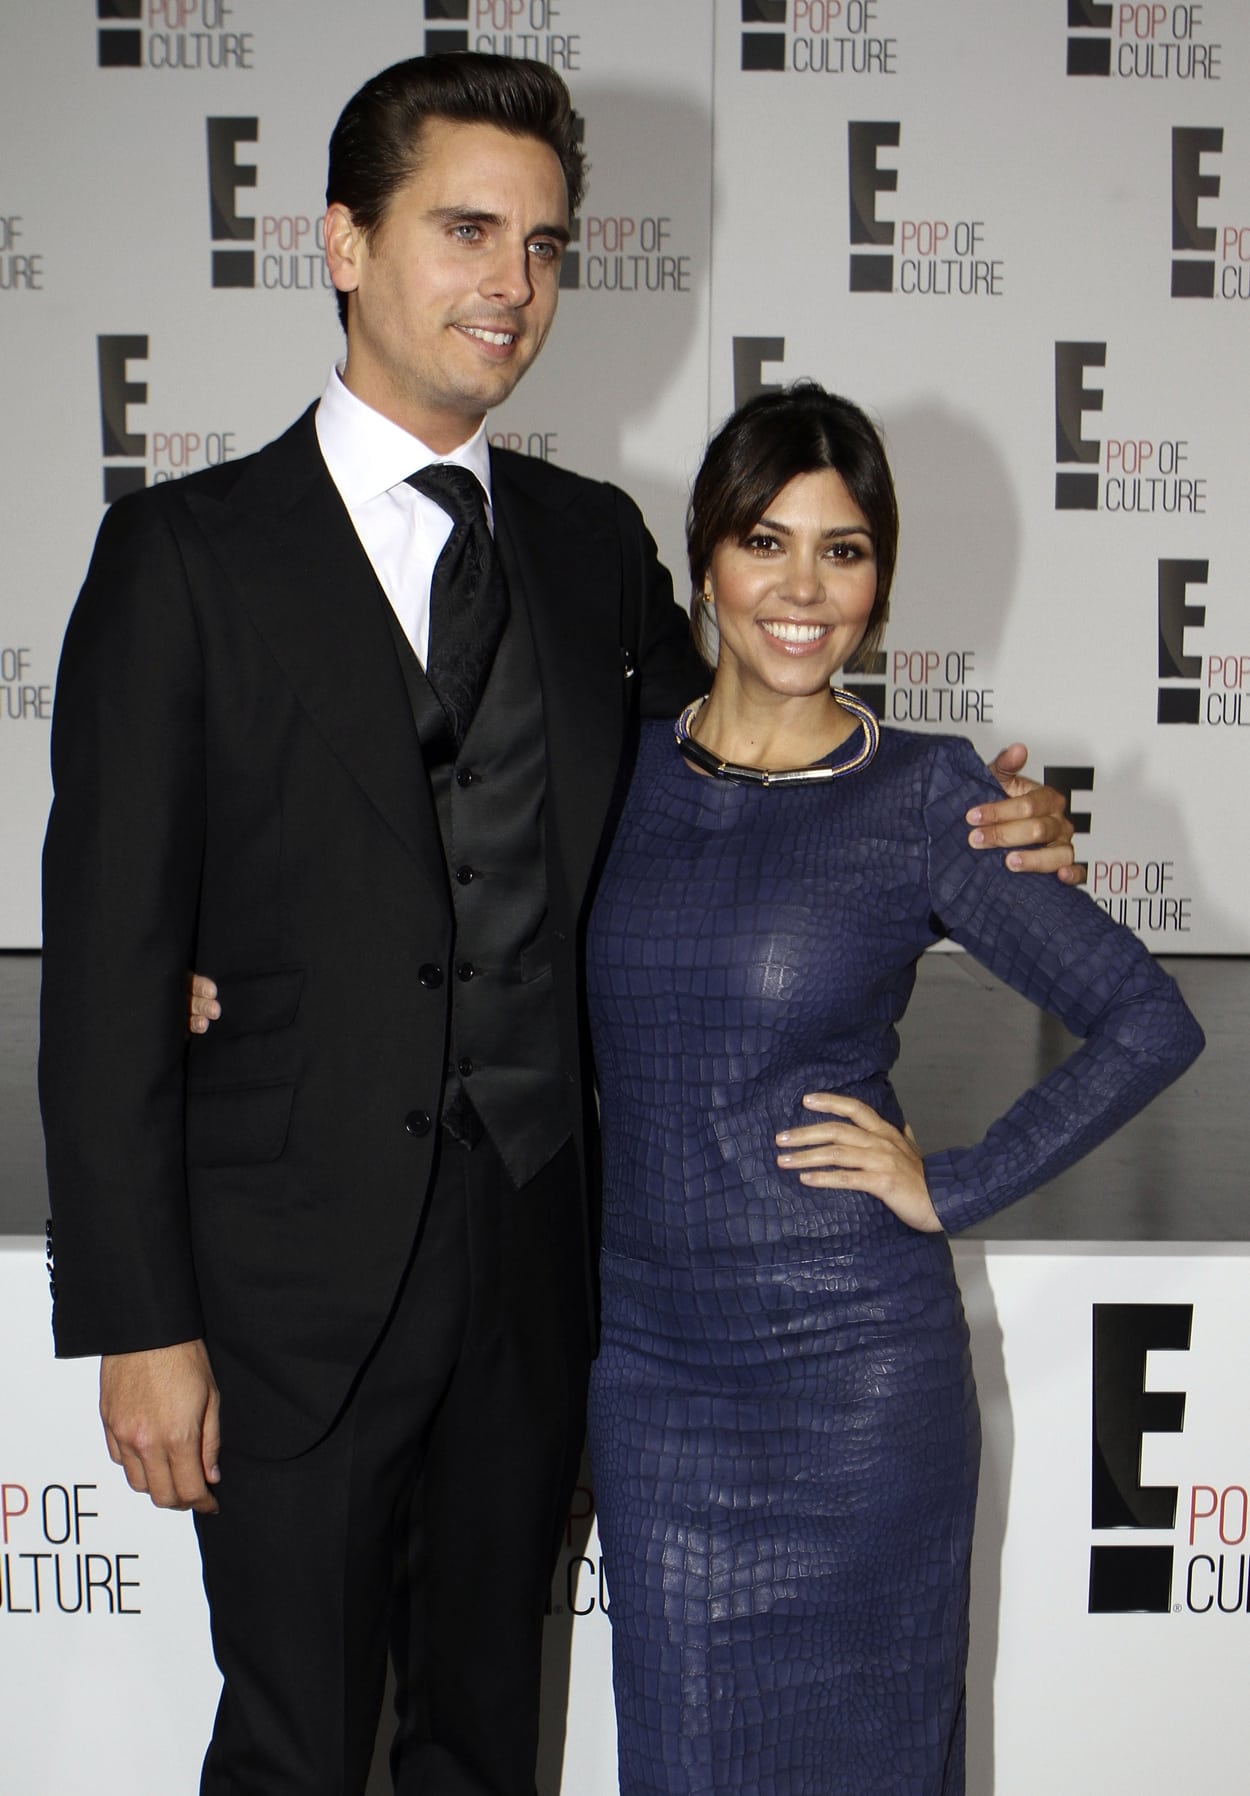 Kourtney Kardashian in a blue crocodile dress and Scott Disick attend the E! 2013 Upfront